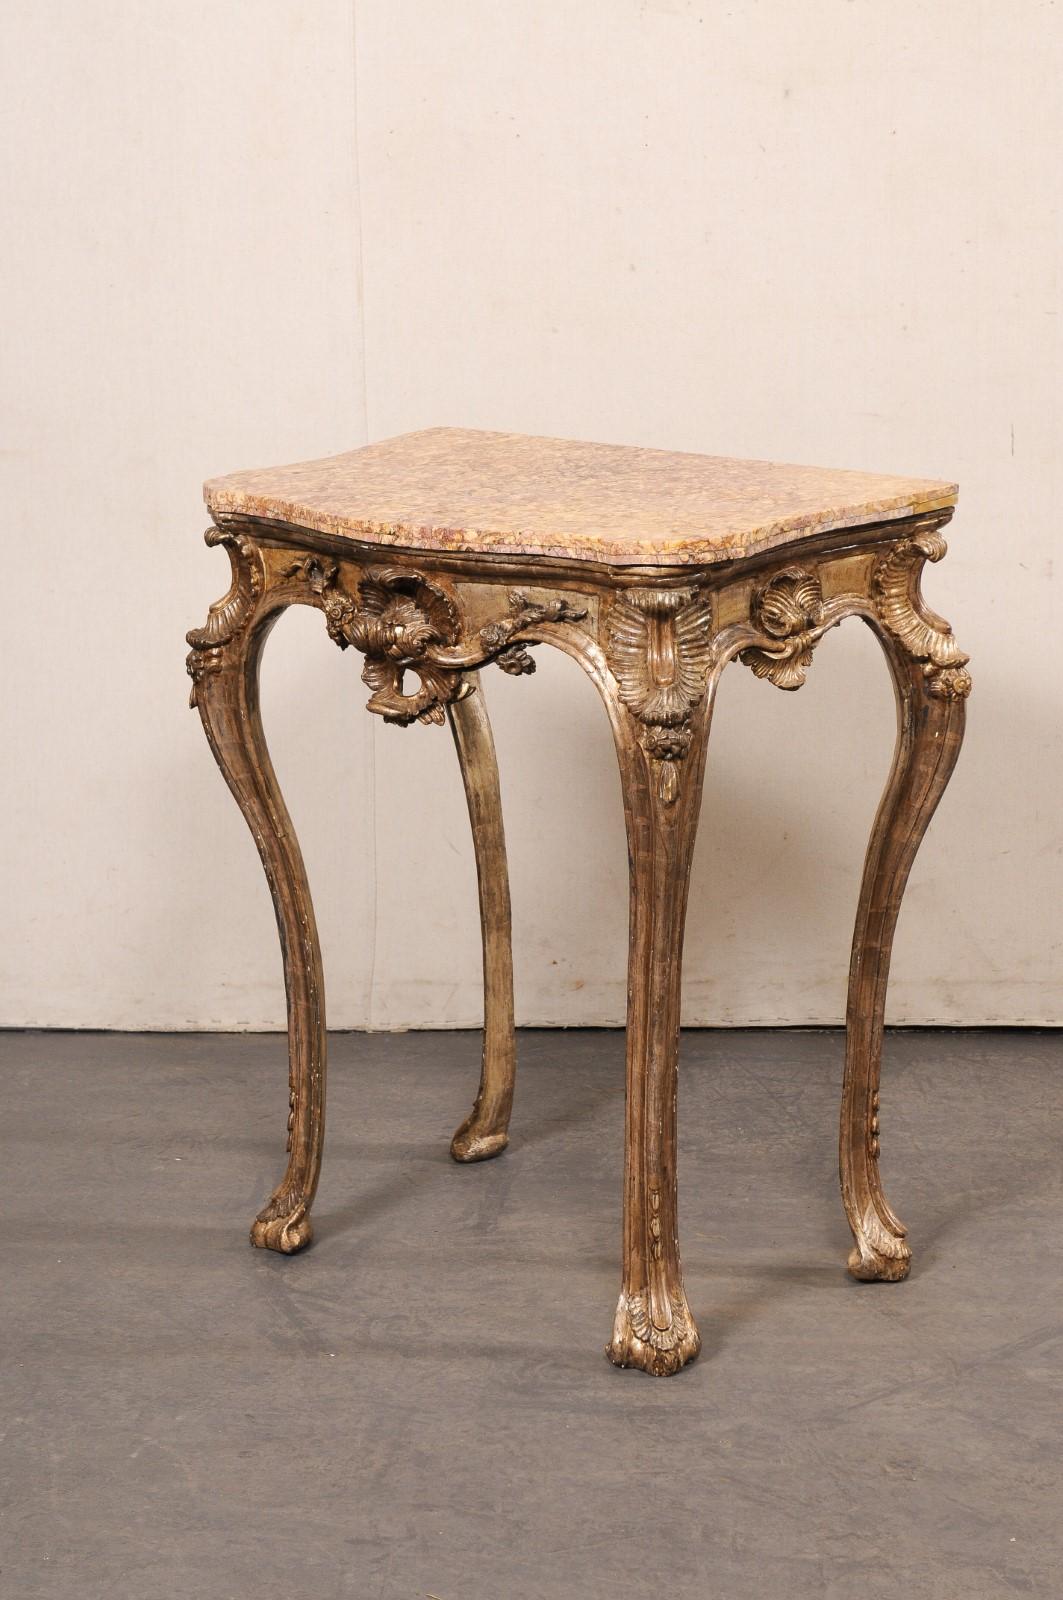 Italian Period Rococo Ornate Accent Table w/its Original Finish & Marble Top For Sale 6